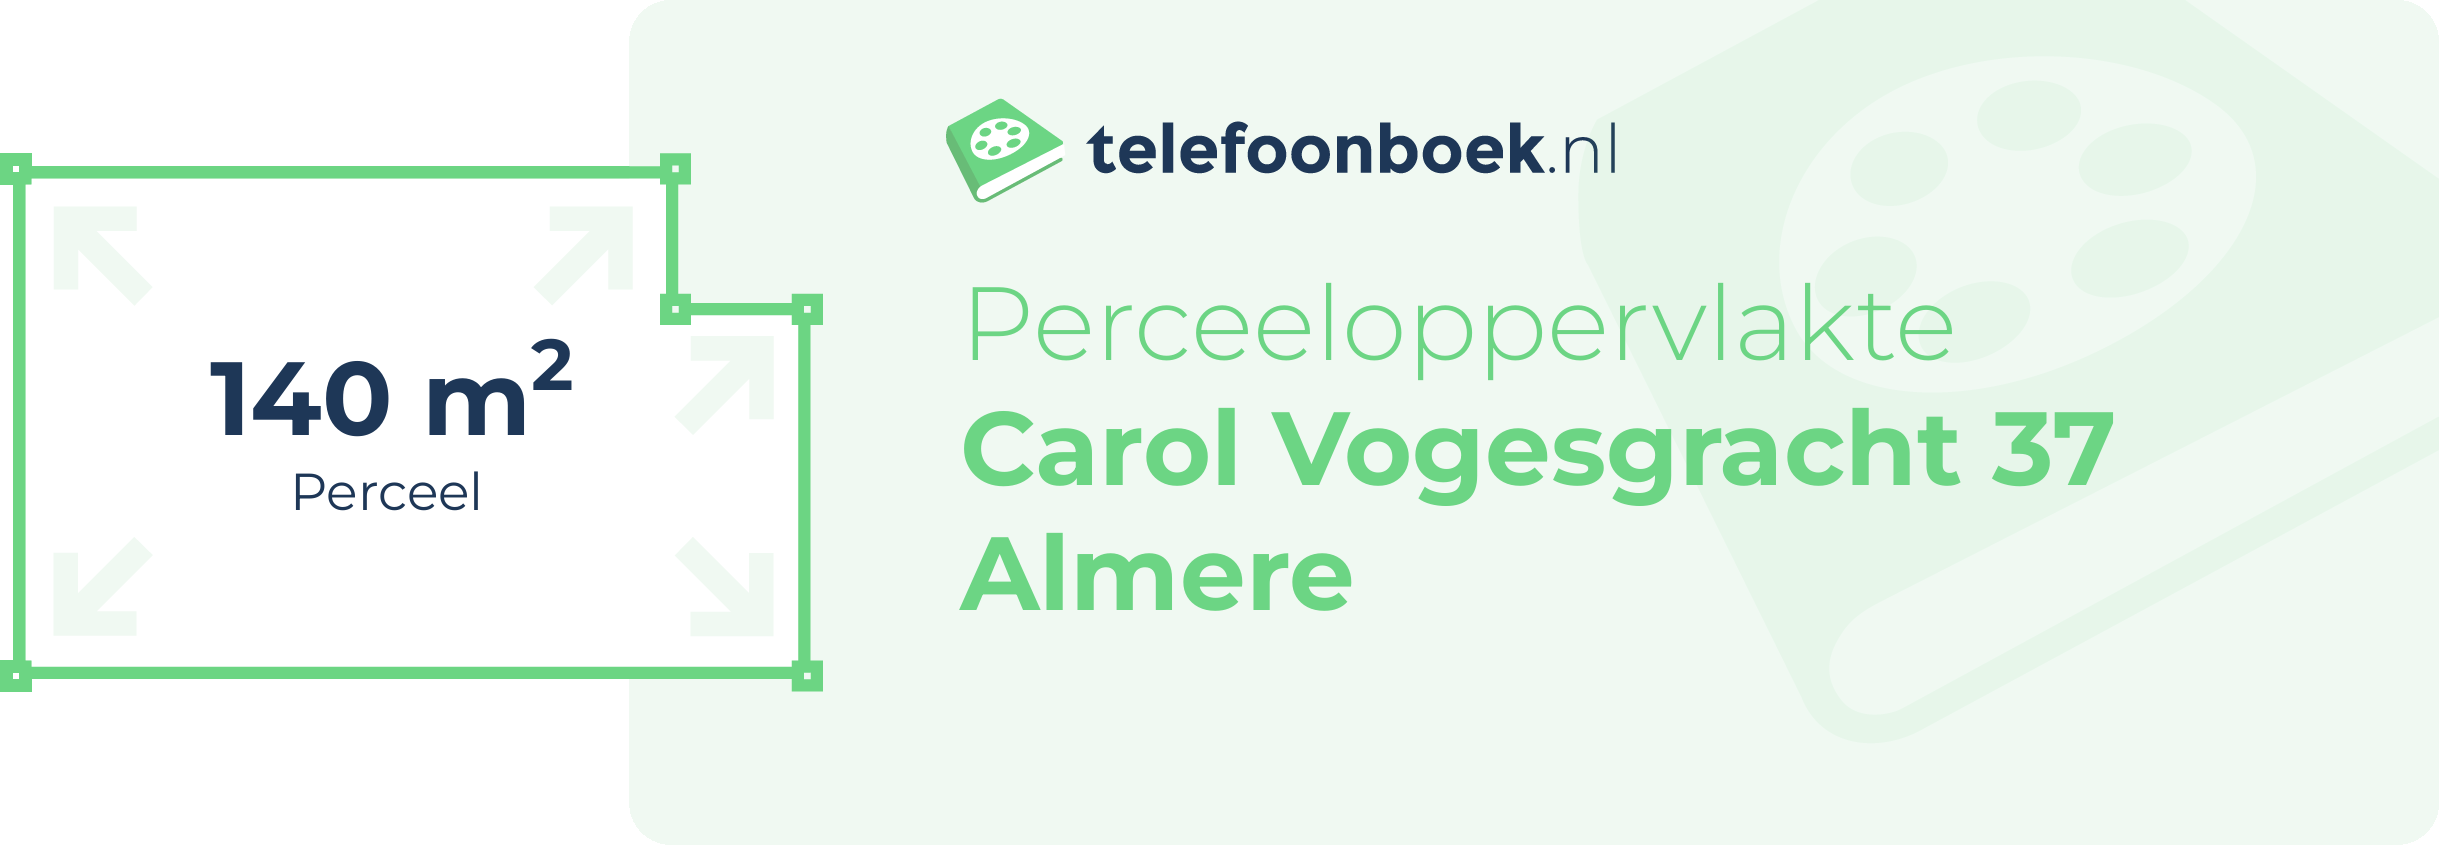 Perceeloppervlakte Carol Vogesgracht 37 Almere